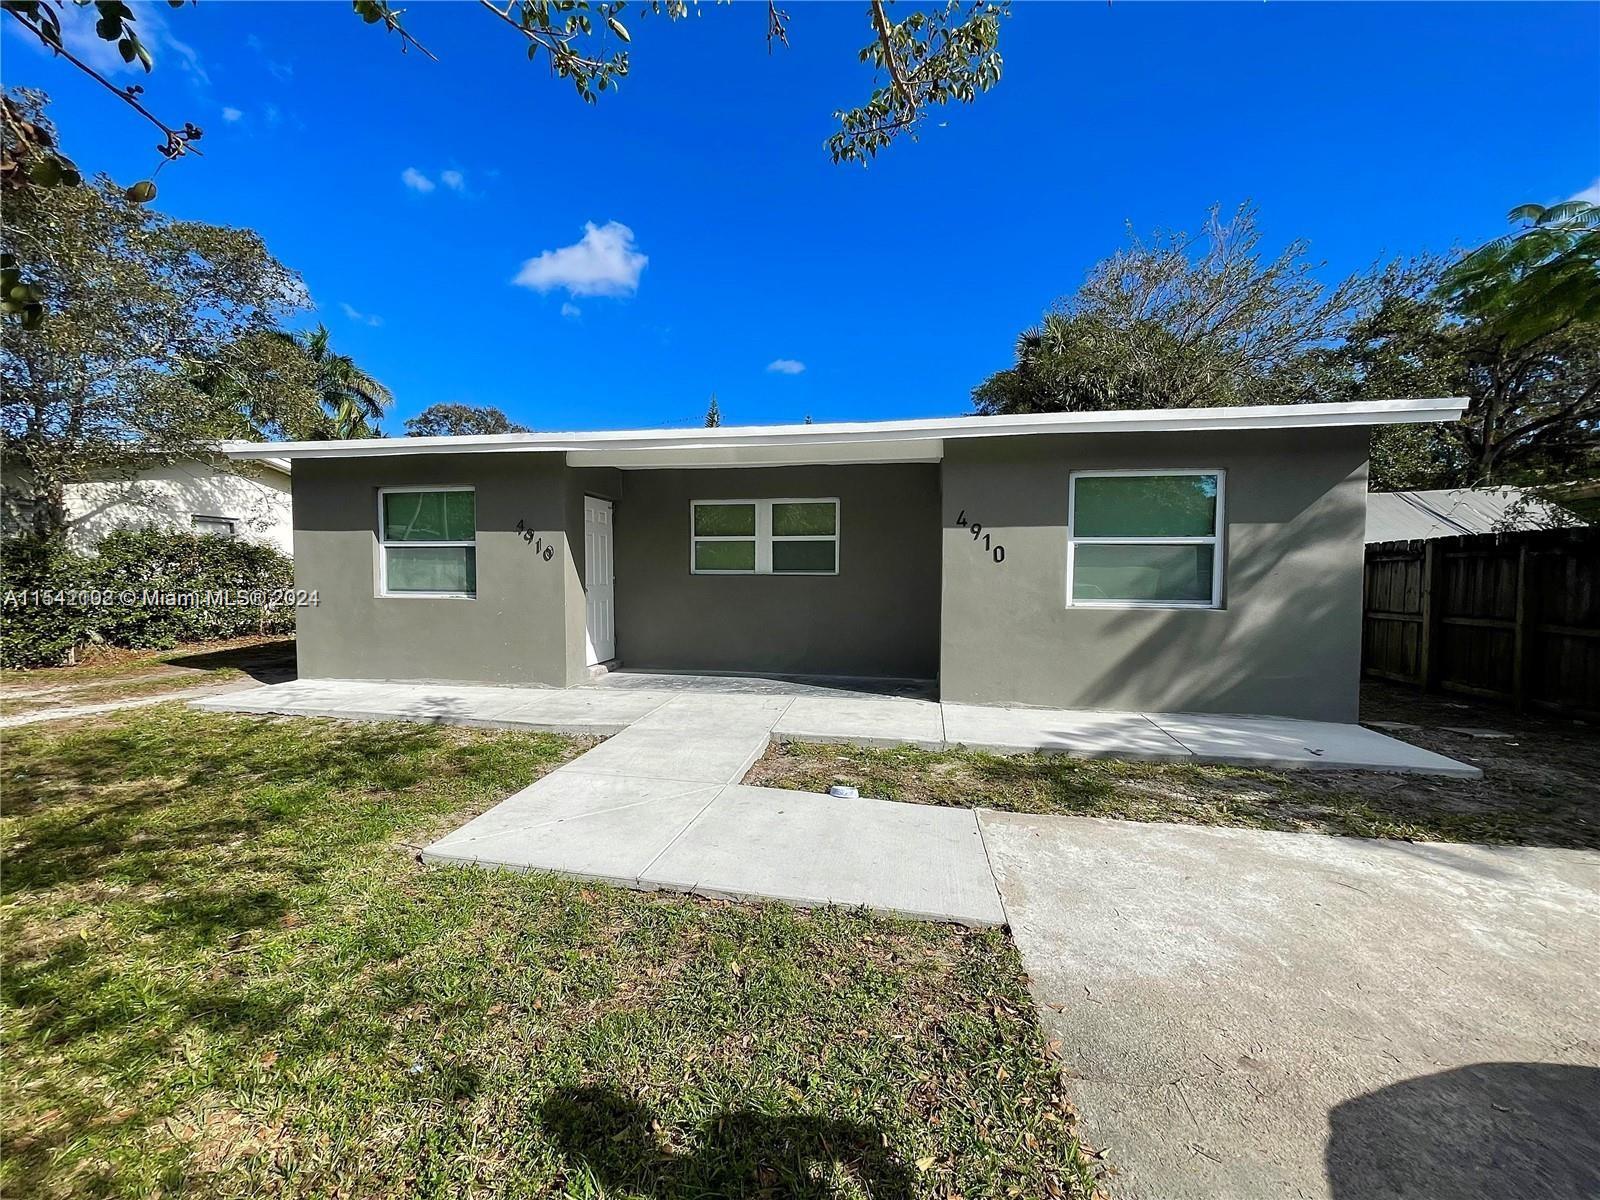 Rental Property at 4910 Sw 28th Ter, Dania Beach, Miami-Dade County, Florida -  - $899,000 MO.